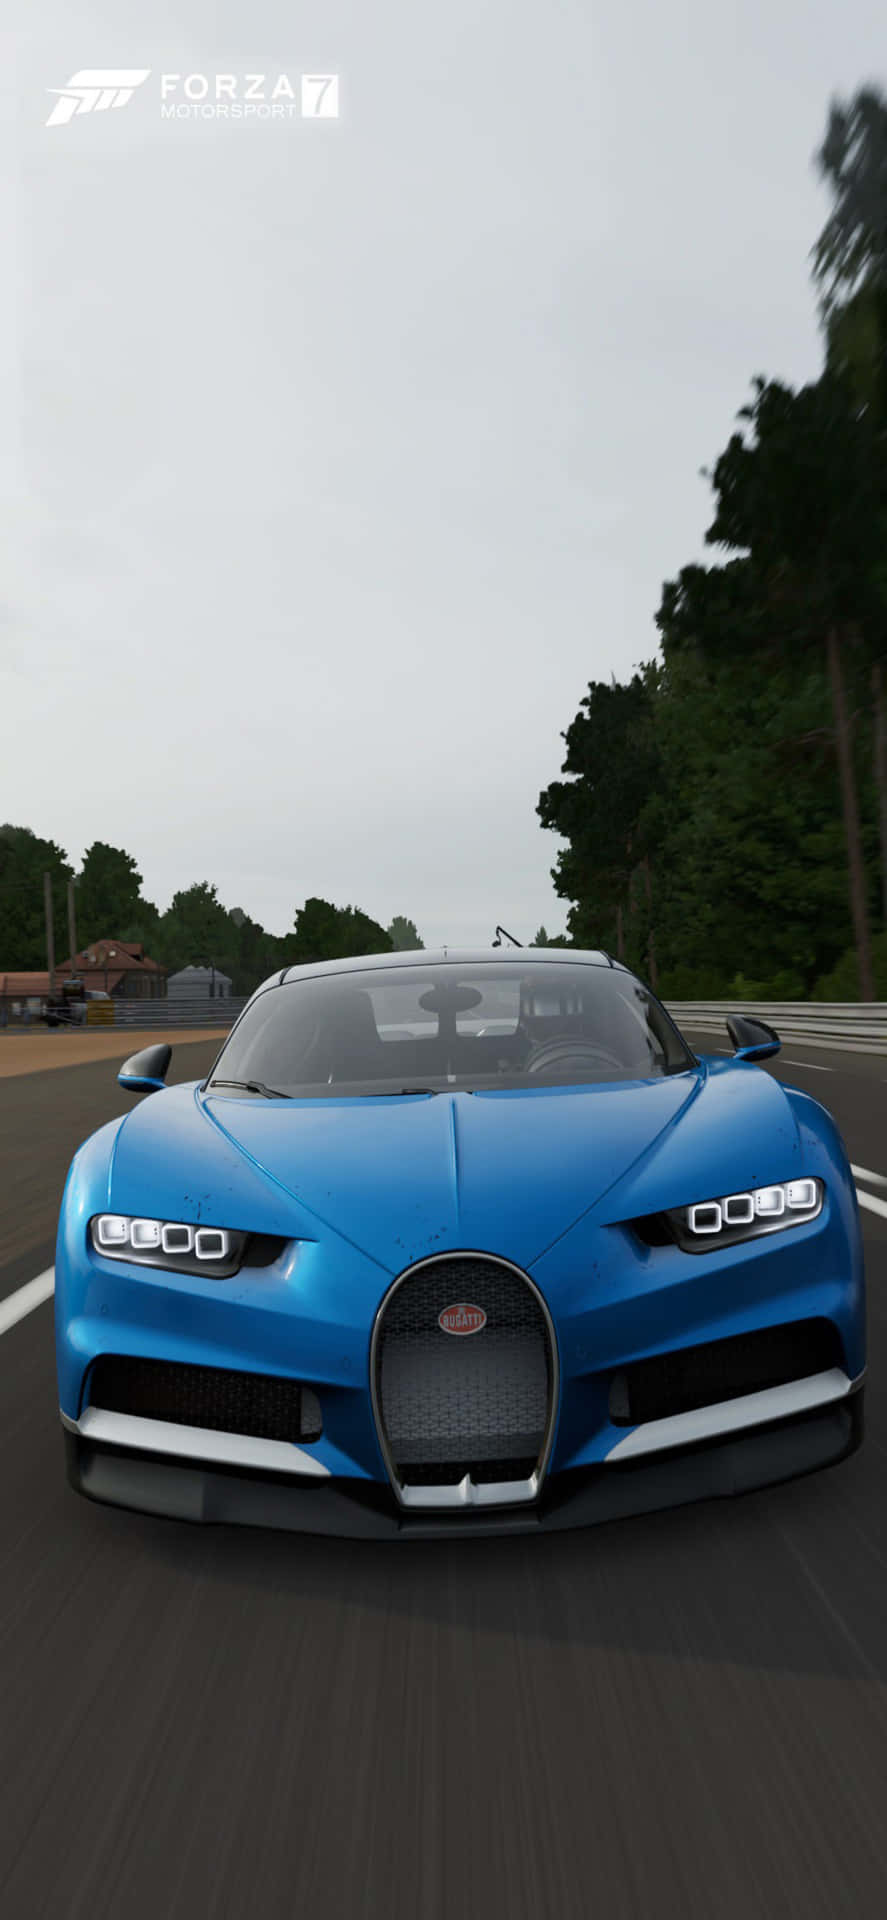 Fondode Pantalla De Un Iphone X Con El Bugatti Chiron Azul En Forza Motorsport 7.